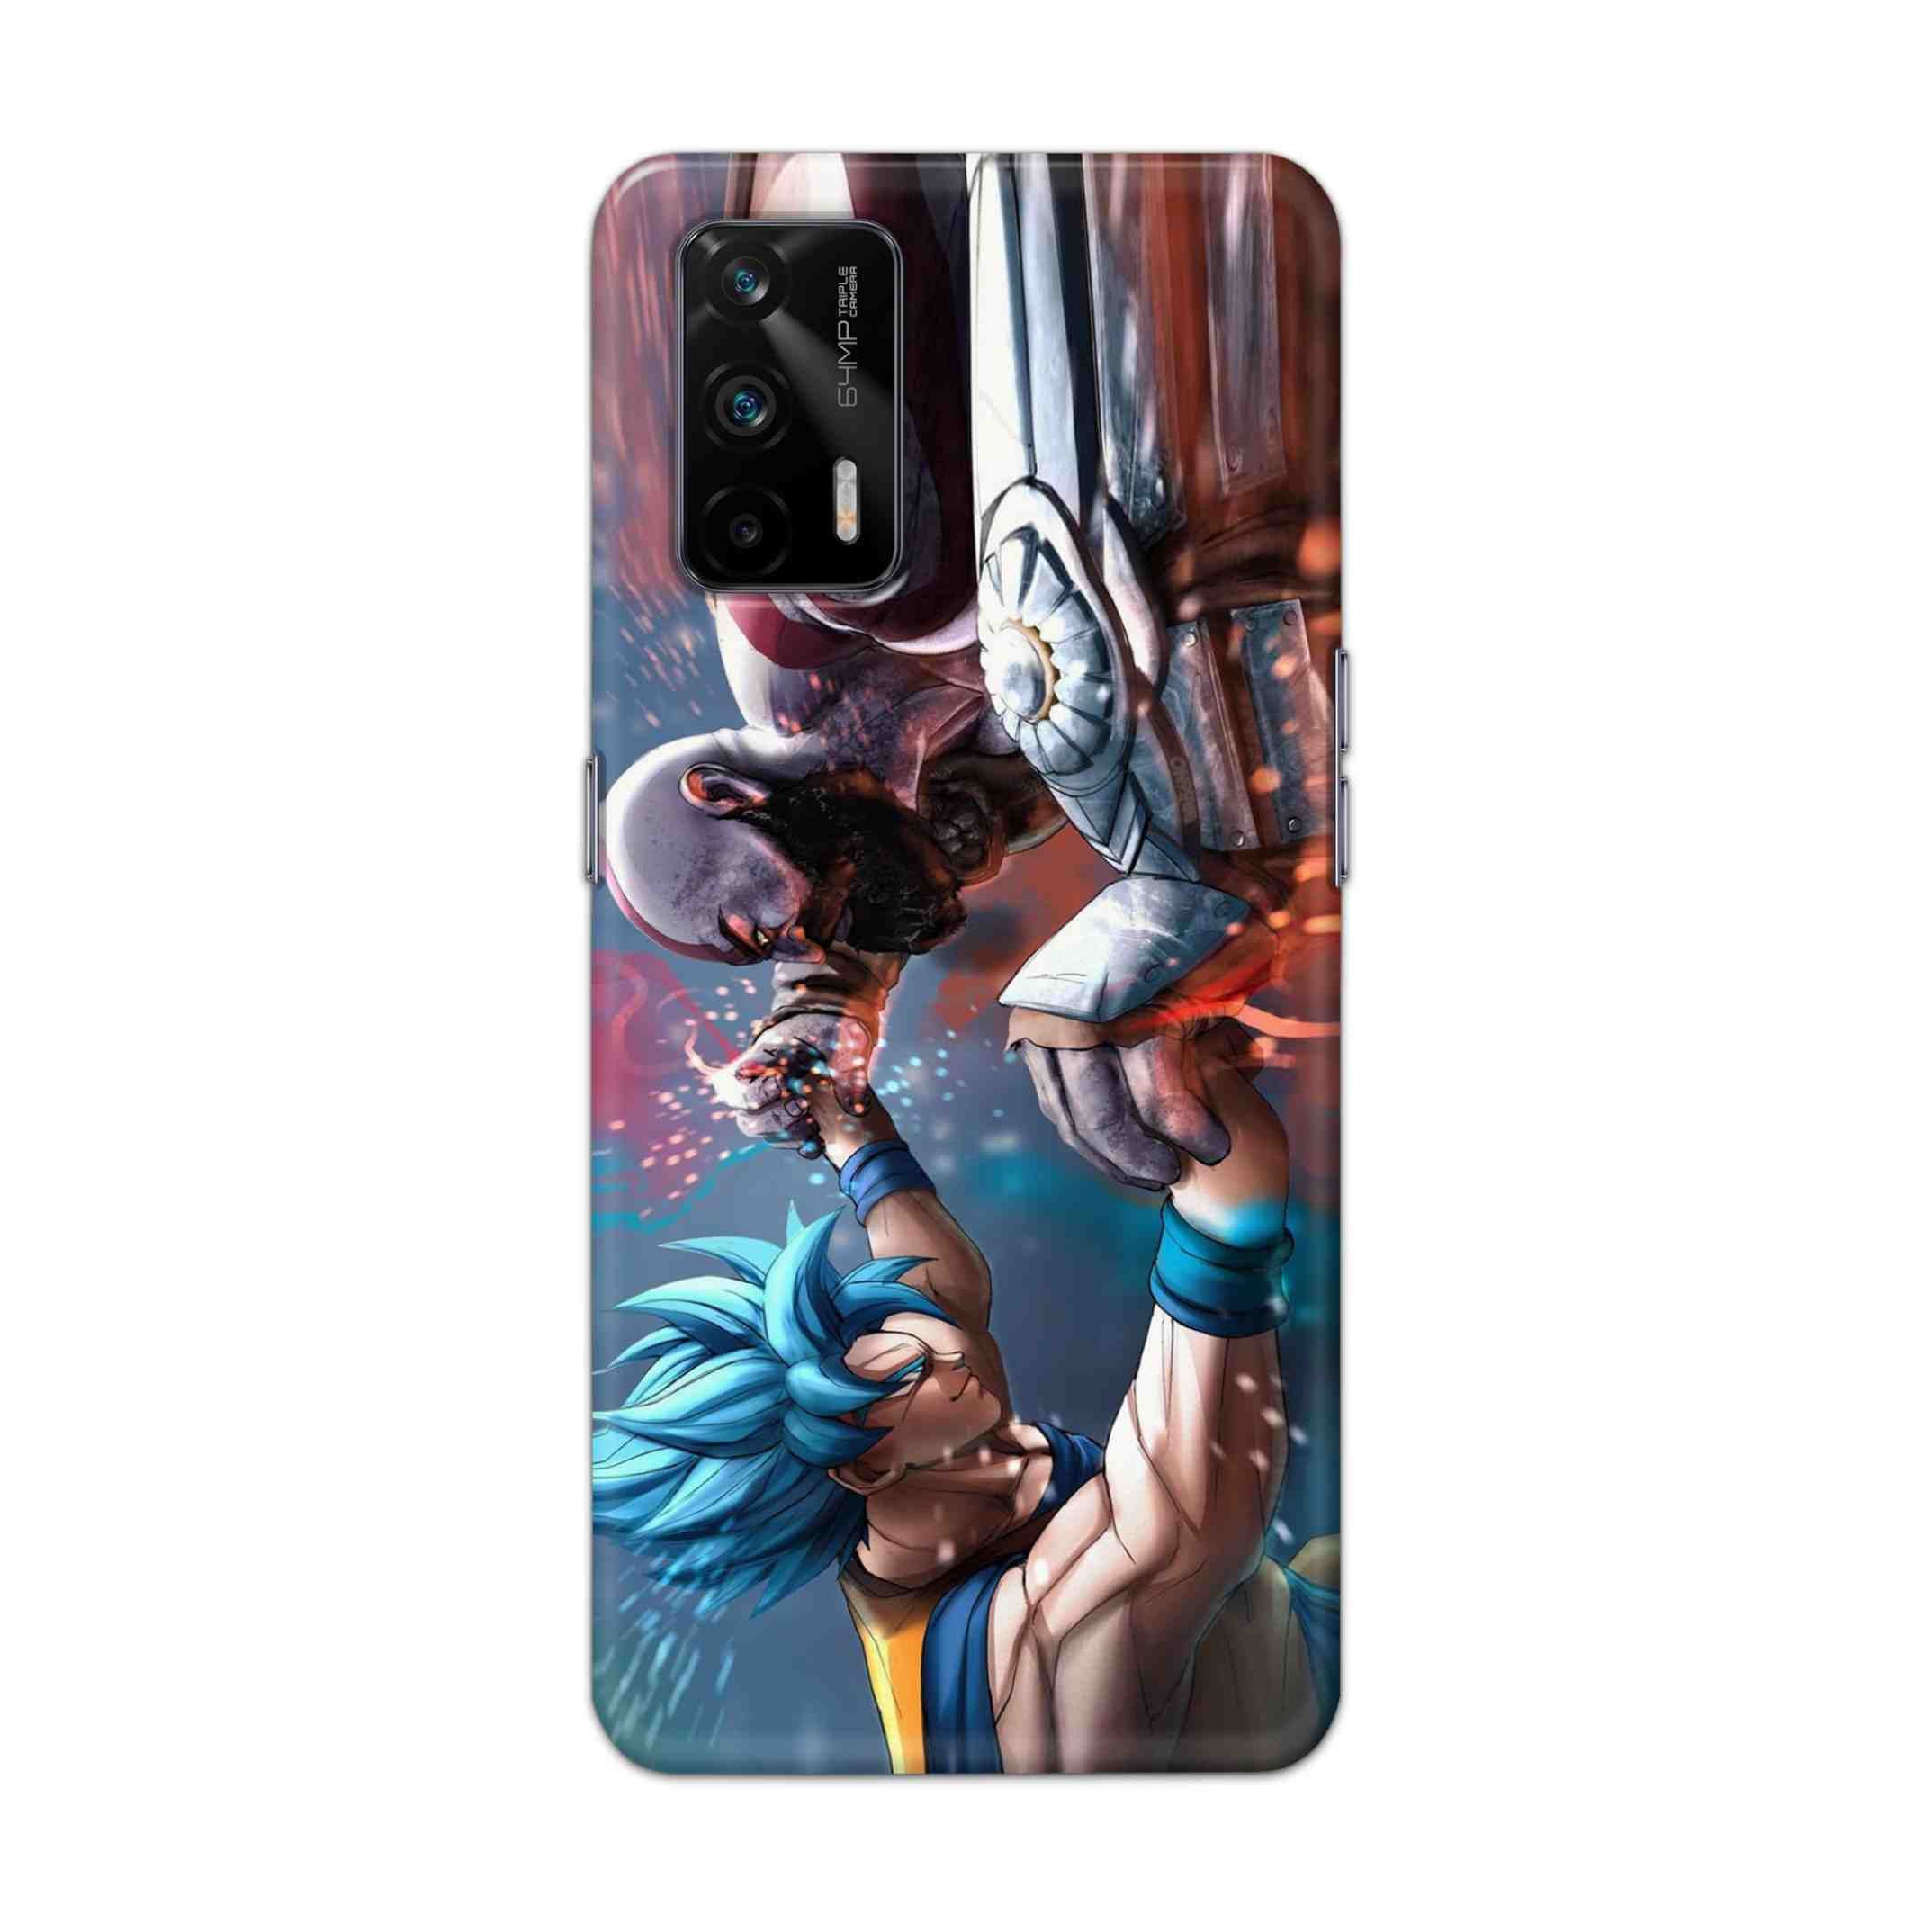 Buy Goku Vs Kratos Hard Back Mobile Phone Case Cover For Realme X7 Max Online